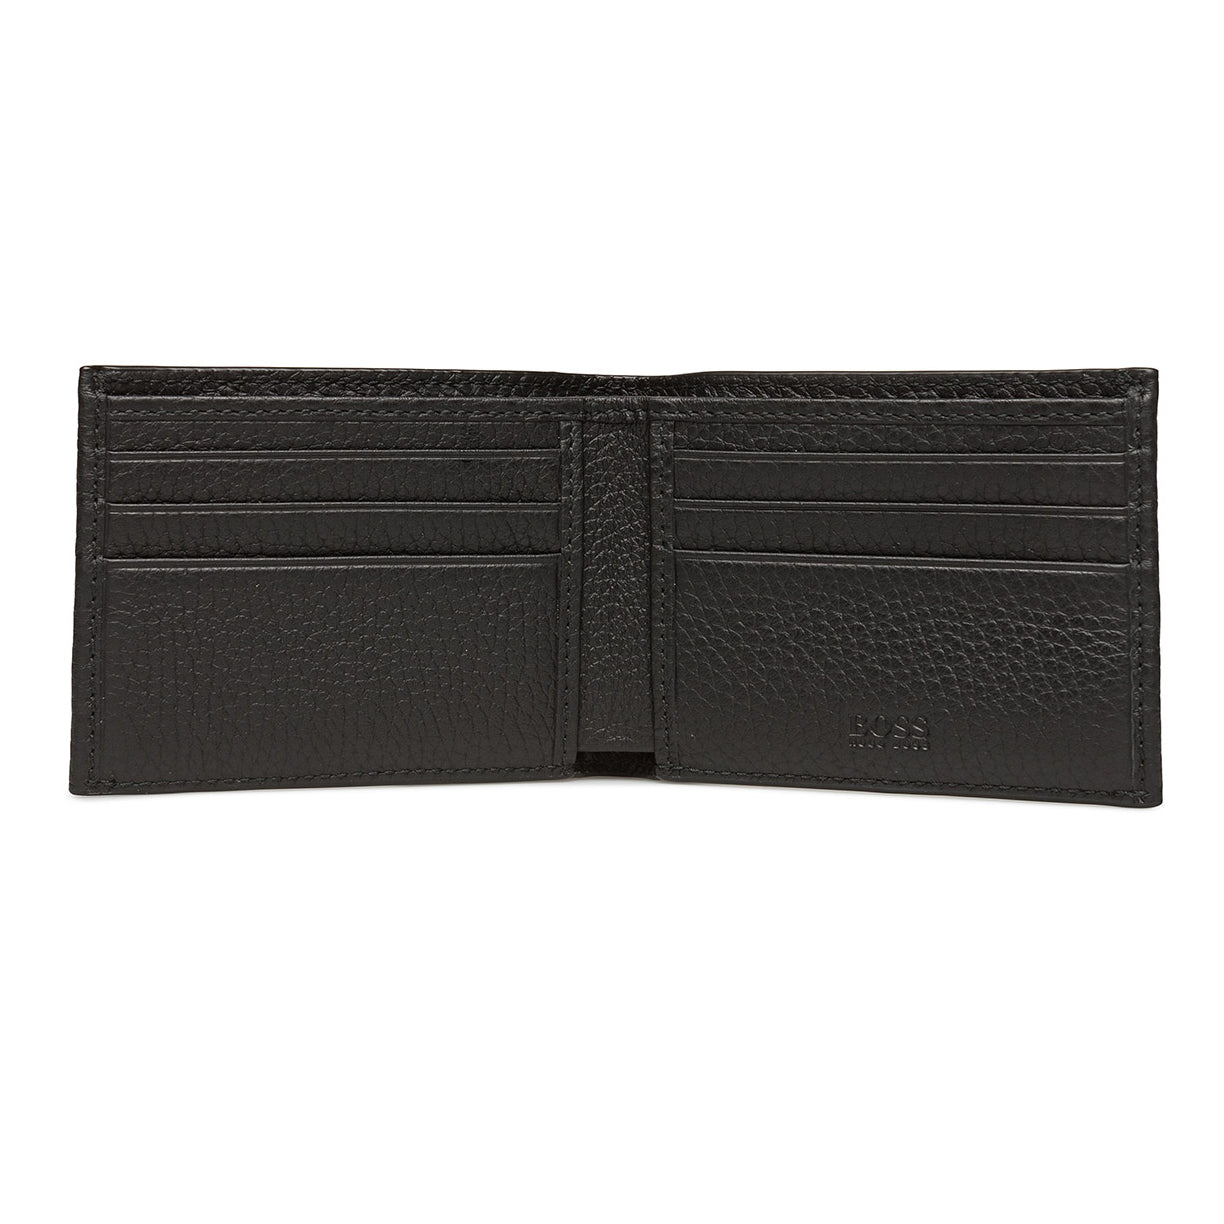 Boss Hugo Boss Crosstown 6cc Wallet Leather Black – Rafaelos